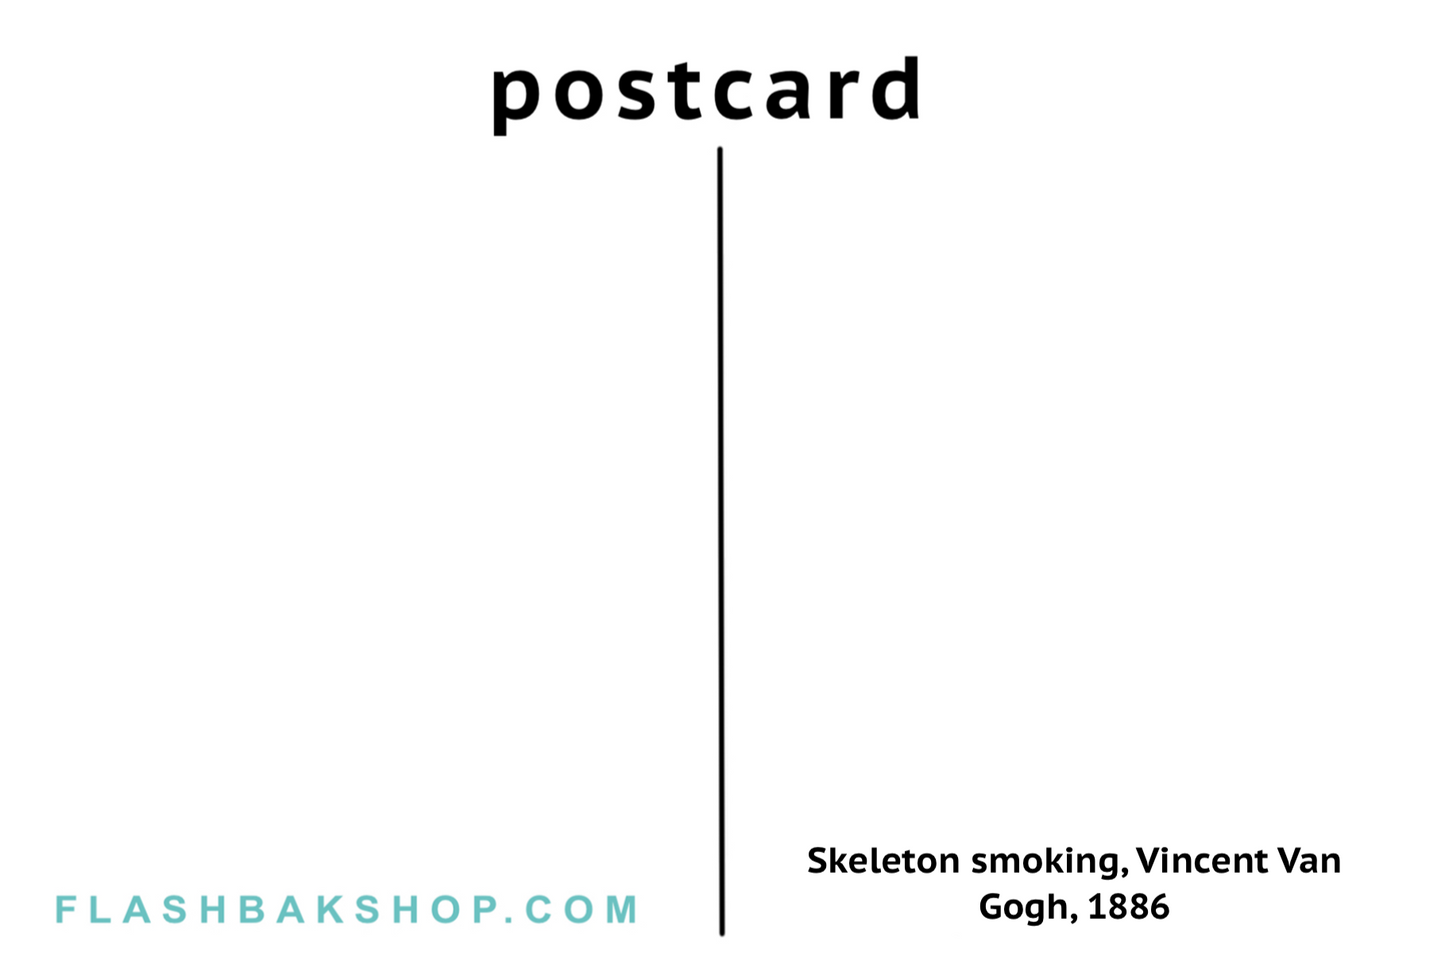 Skeleton Smoking by Van Gogh 1886 - Postcard